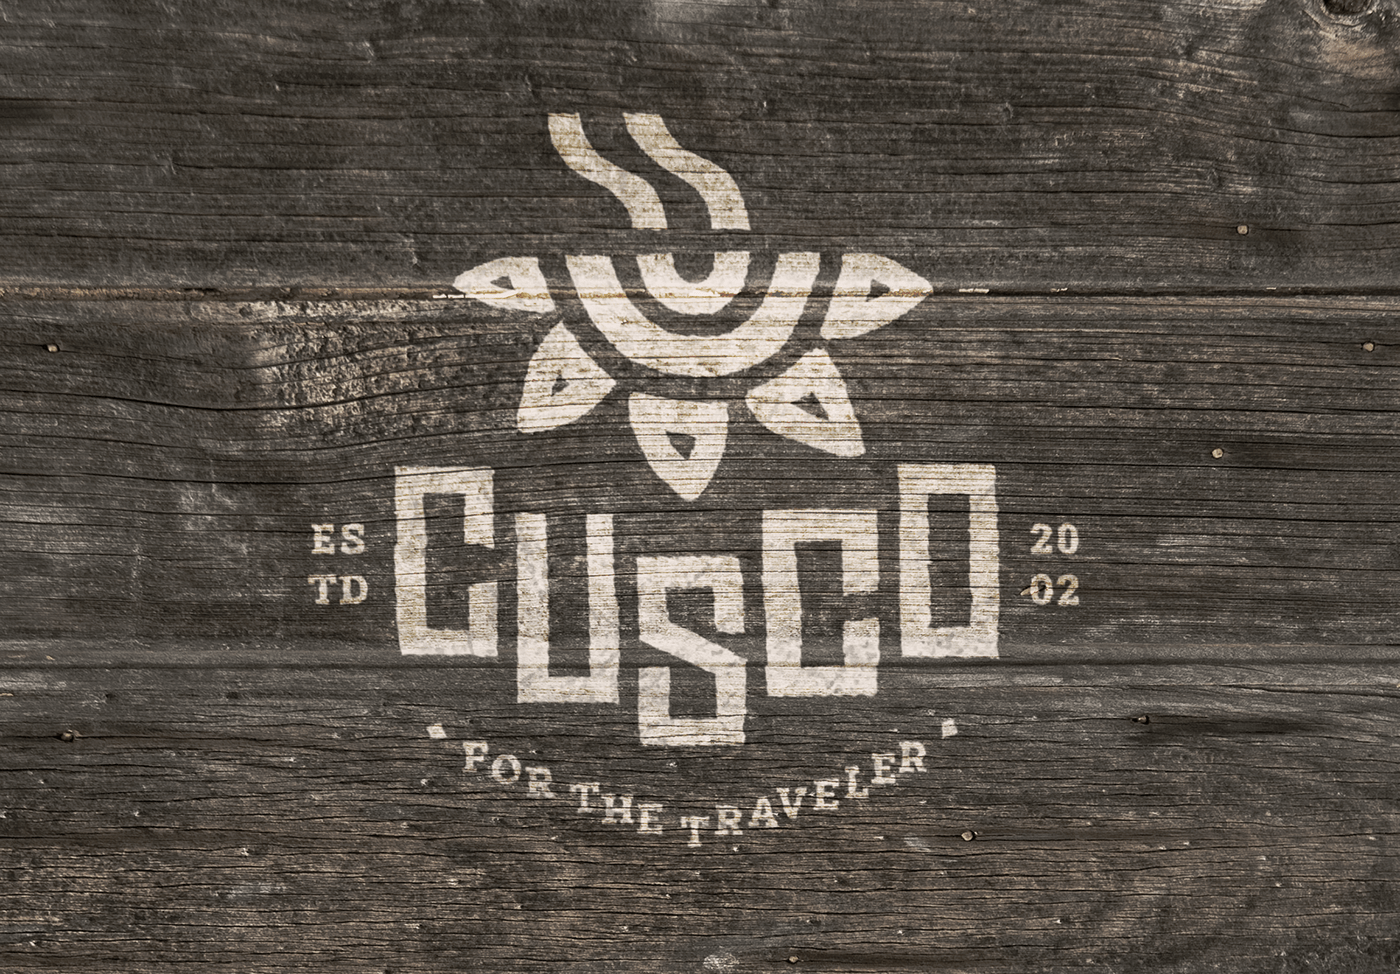 branding  cusco graphic design  identity ILLUSTRATION  logo Packaging product rebranding Coffee